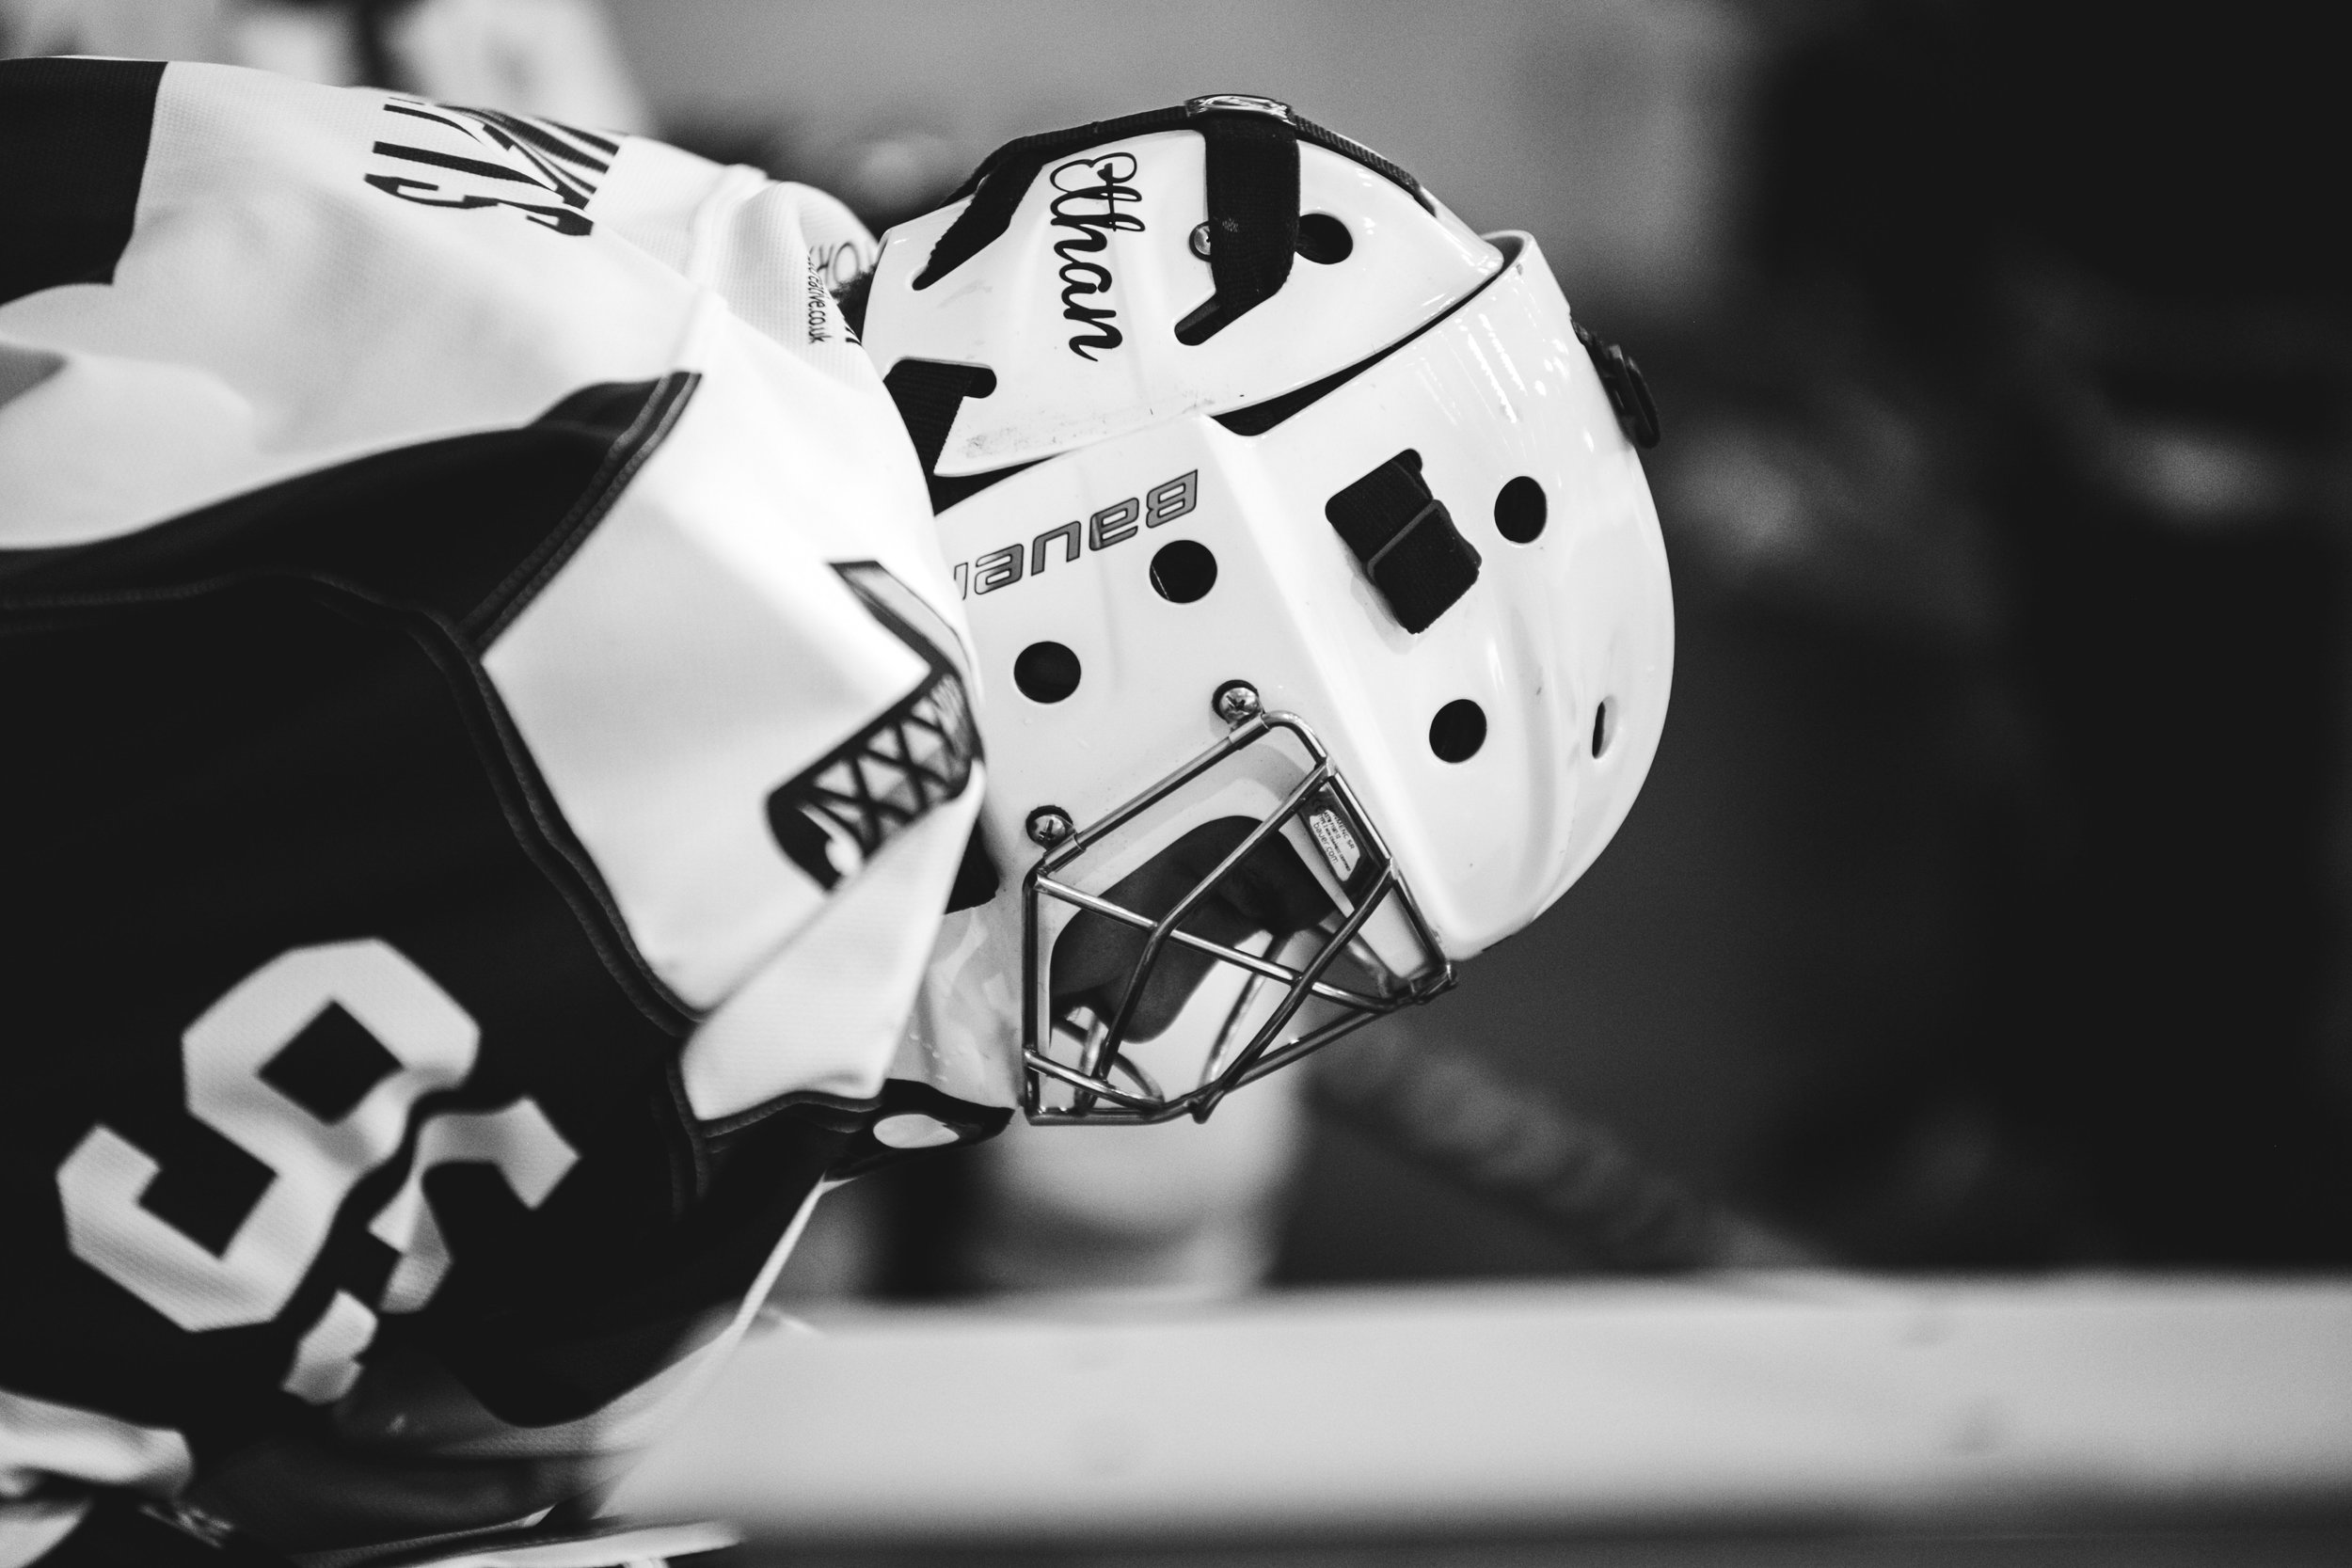 A hockey player wearing a helmet